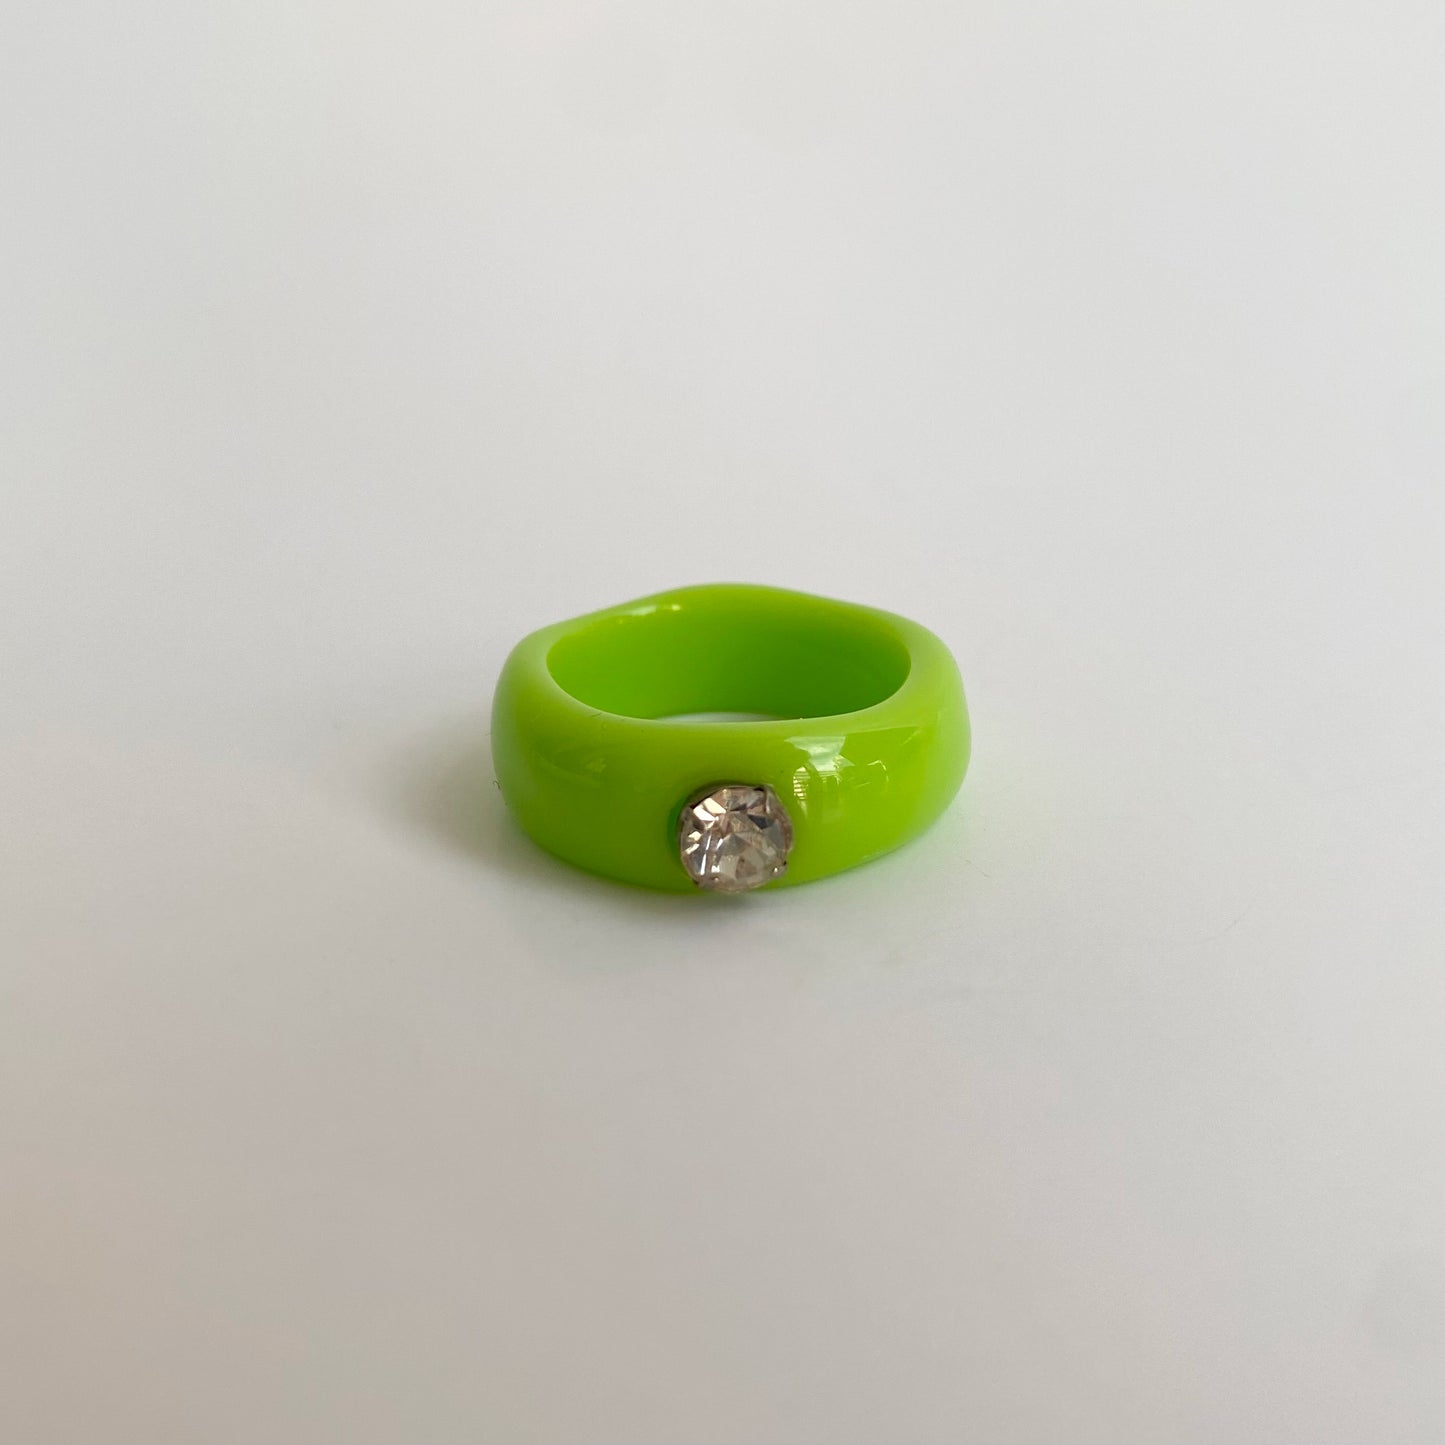 acrylic gem rings in green